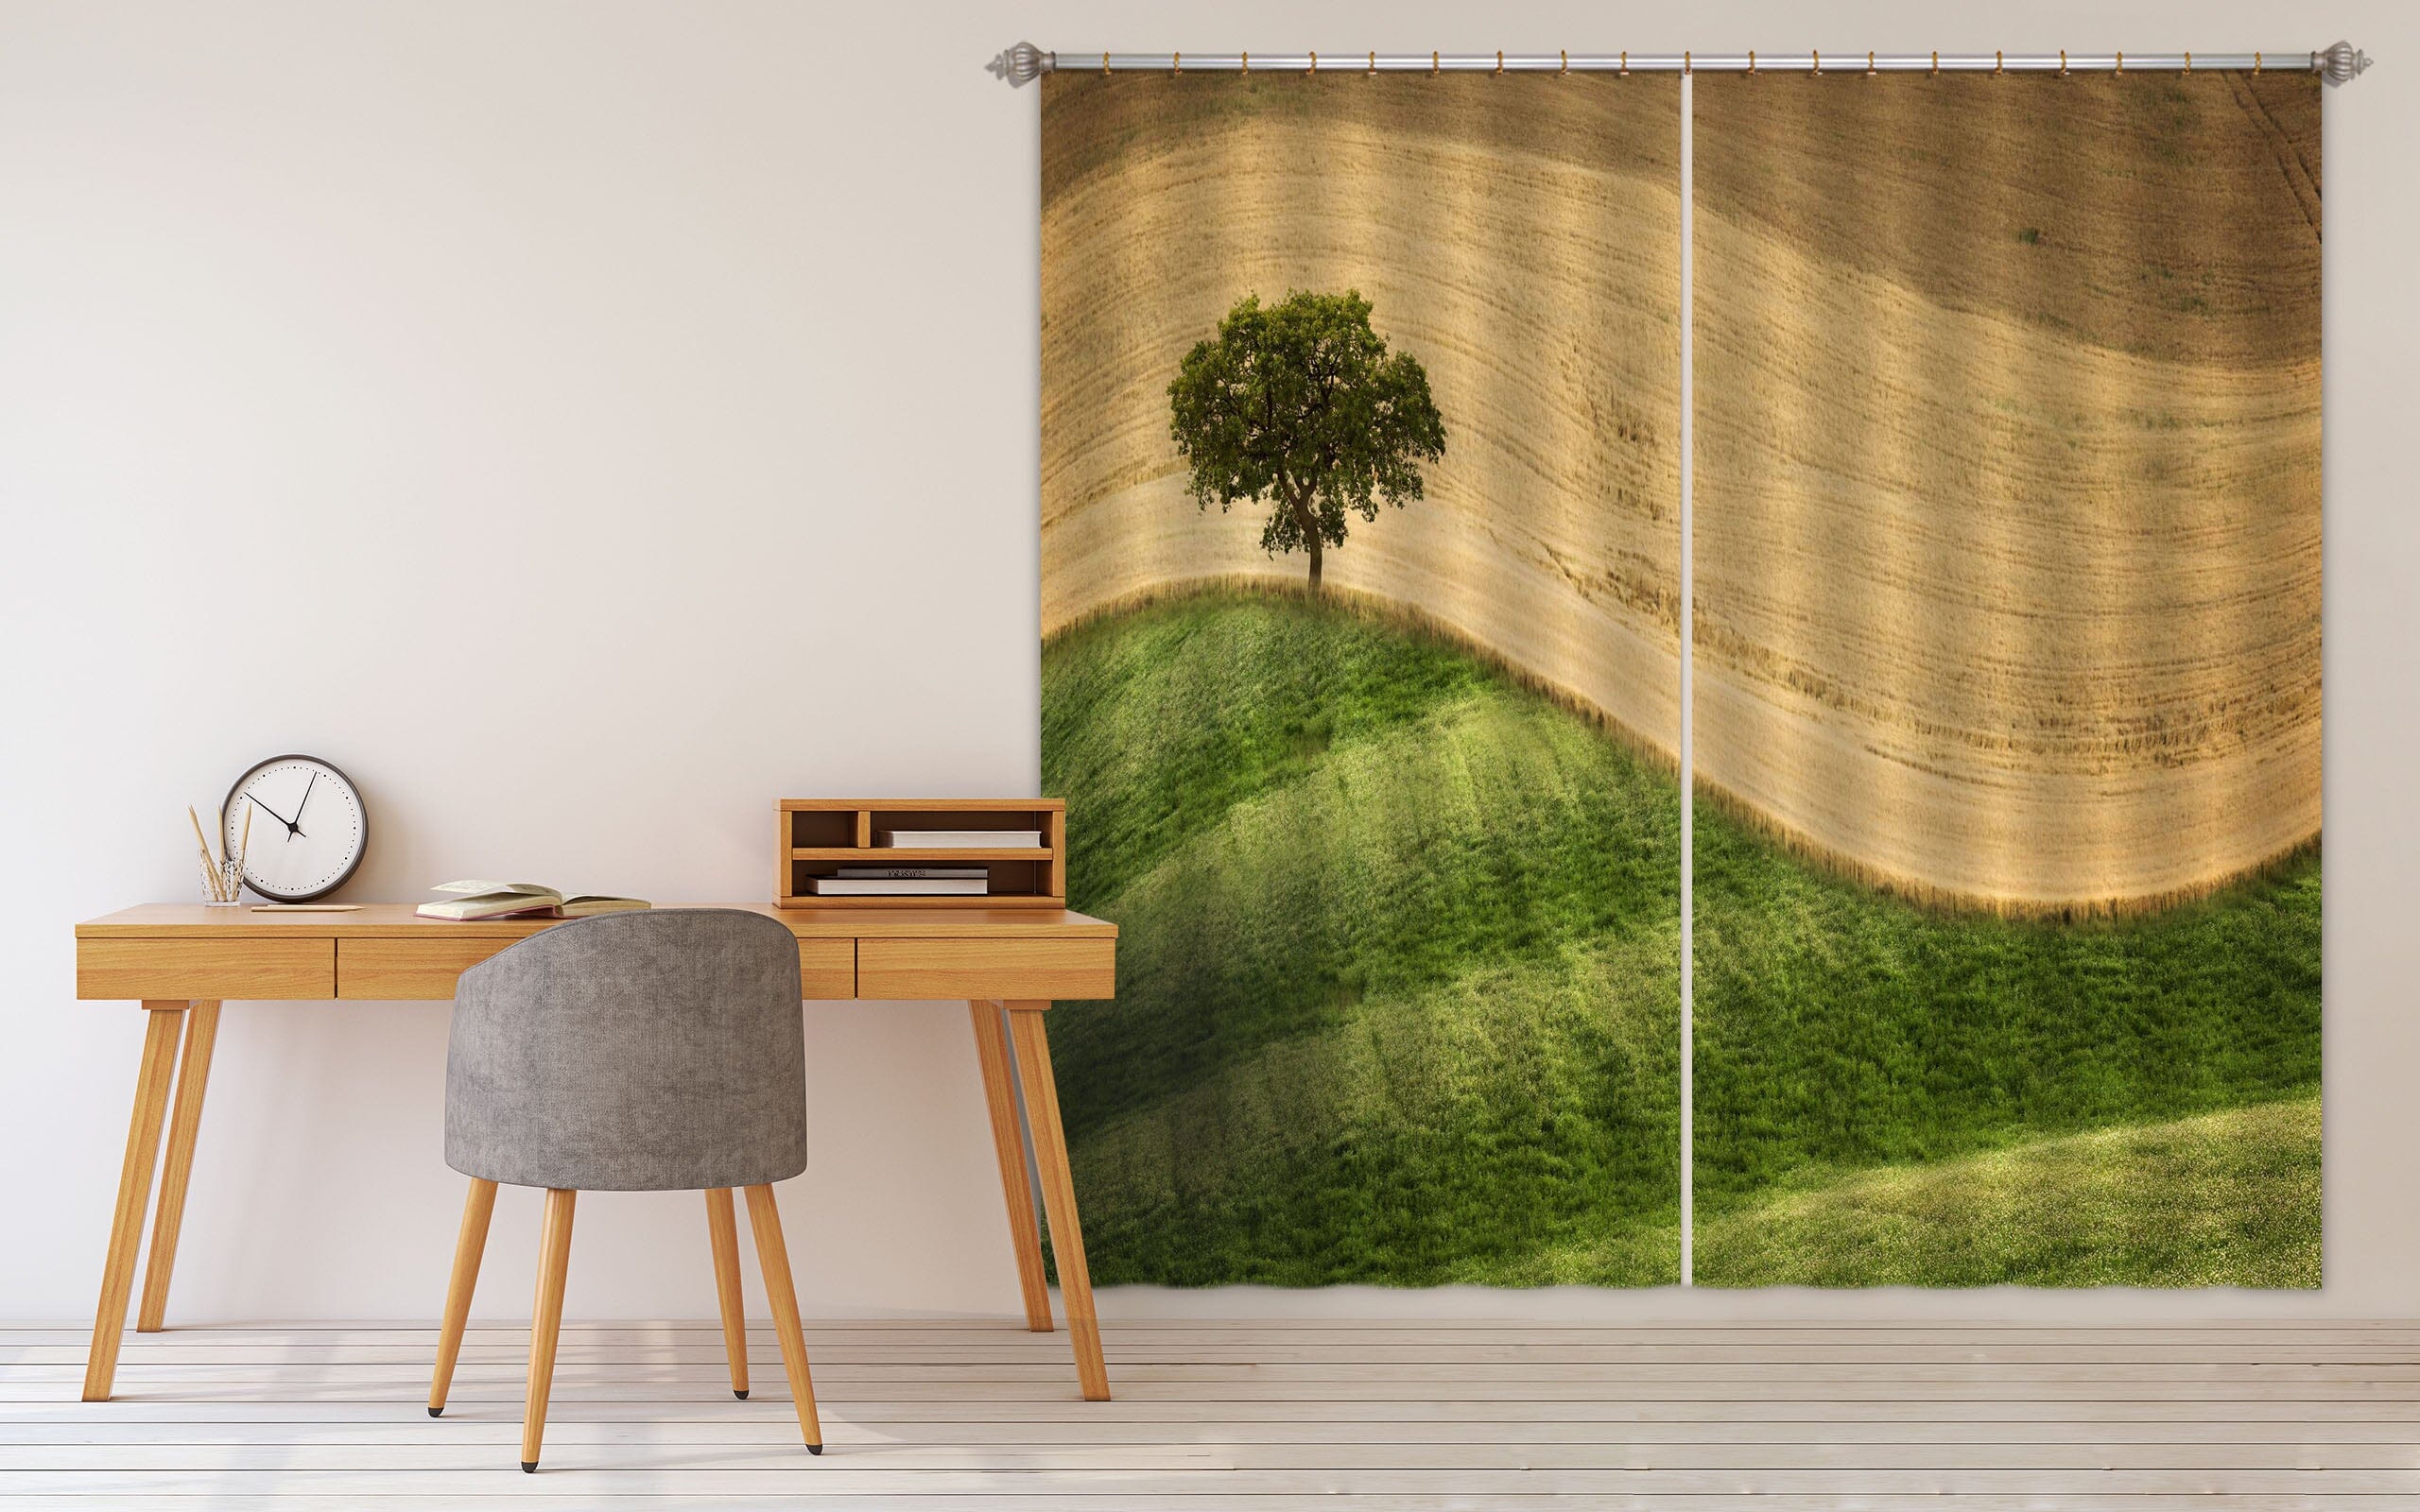 3D Sandy Grassland 164 Marco Carmassi Curtain Curtains Drapes Curtains AJ Creativity Home 